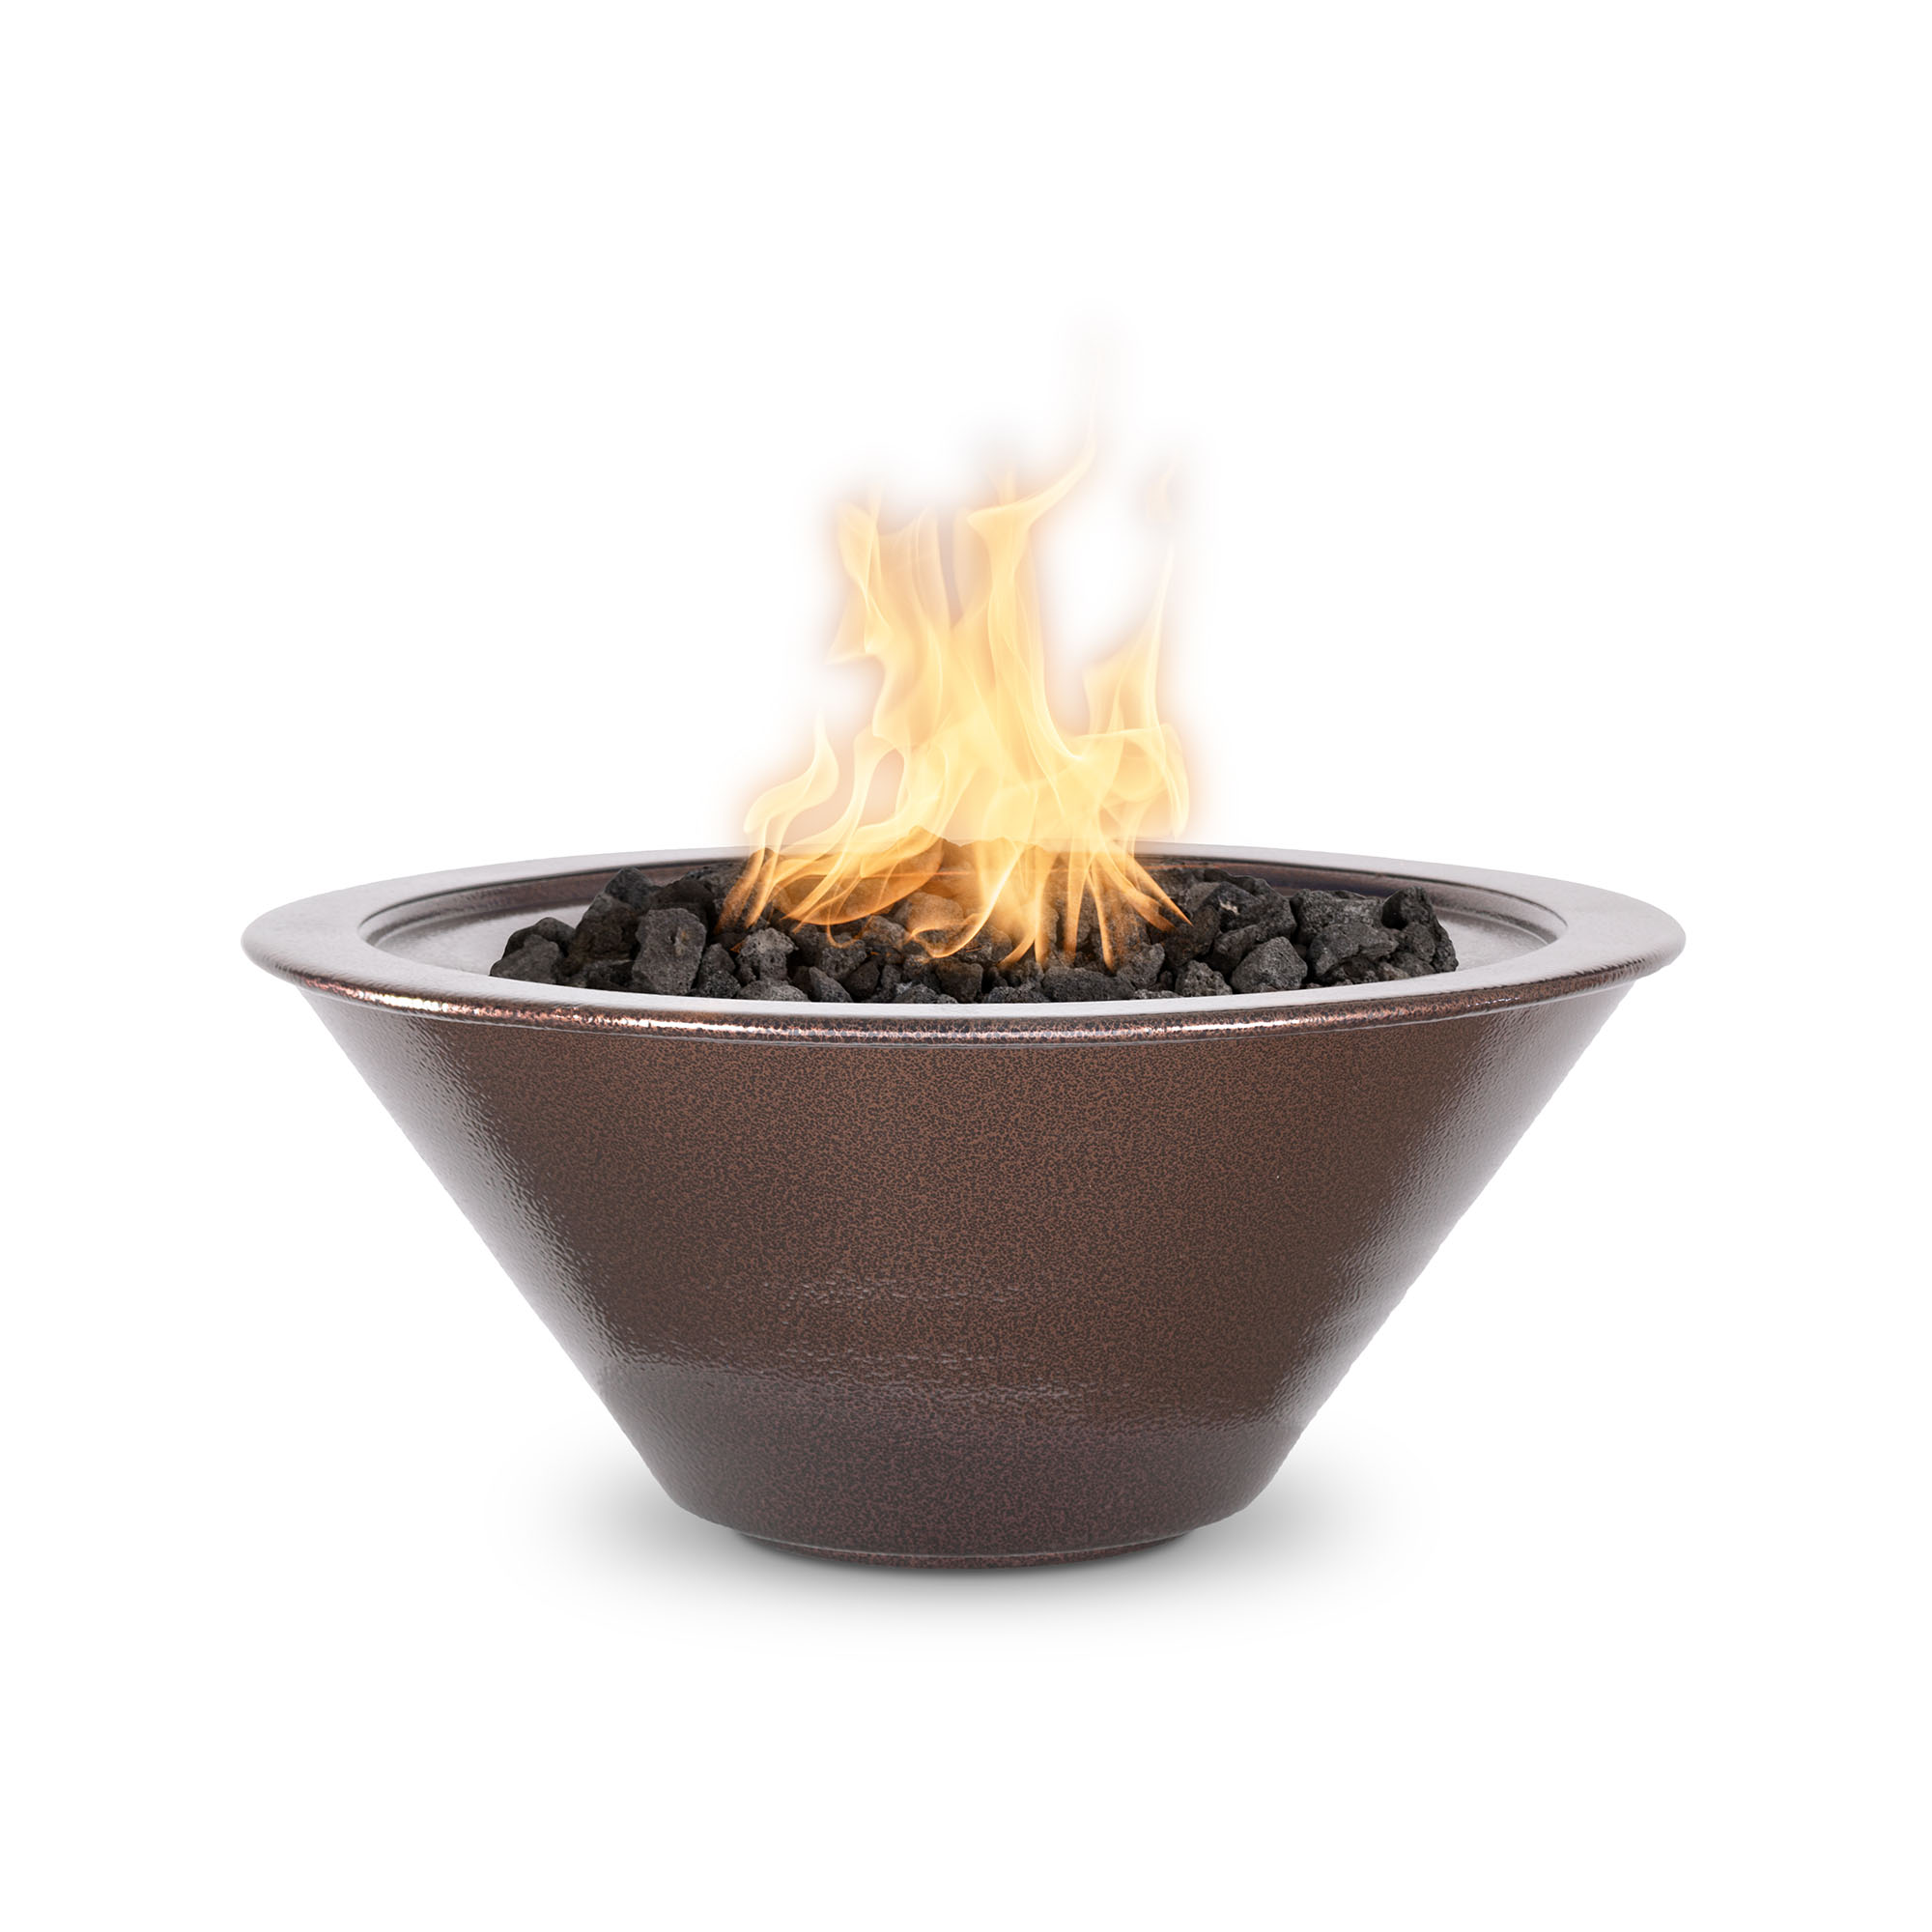 Cazo Powder Coated Fire Bowl - Copper Vein